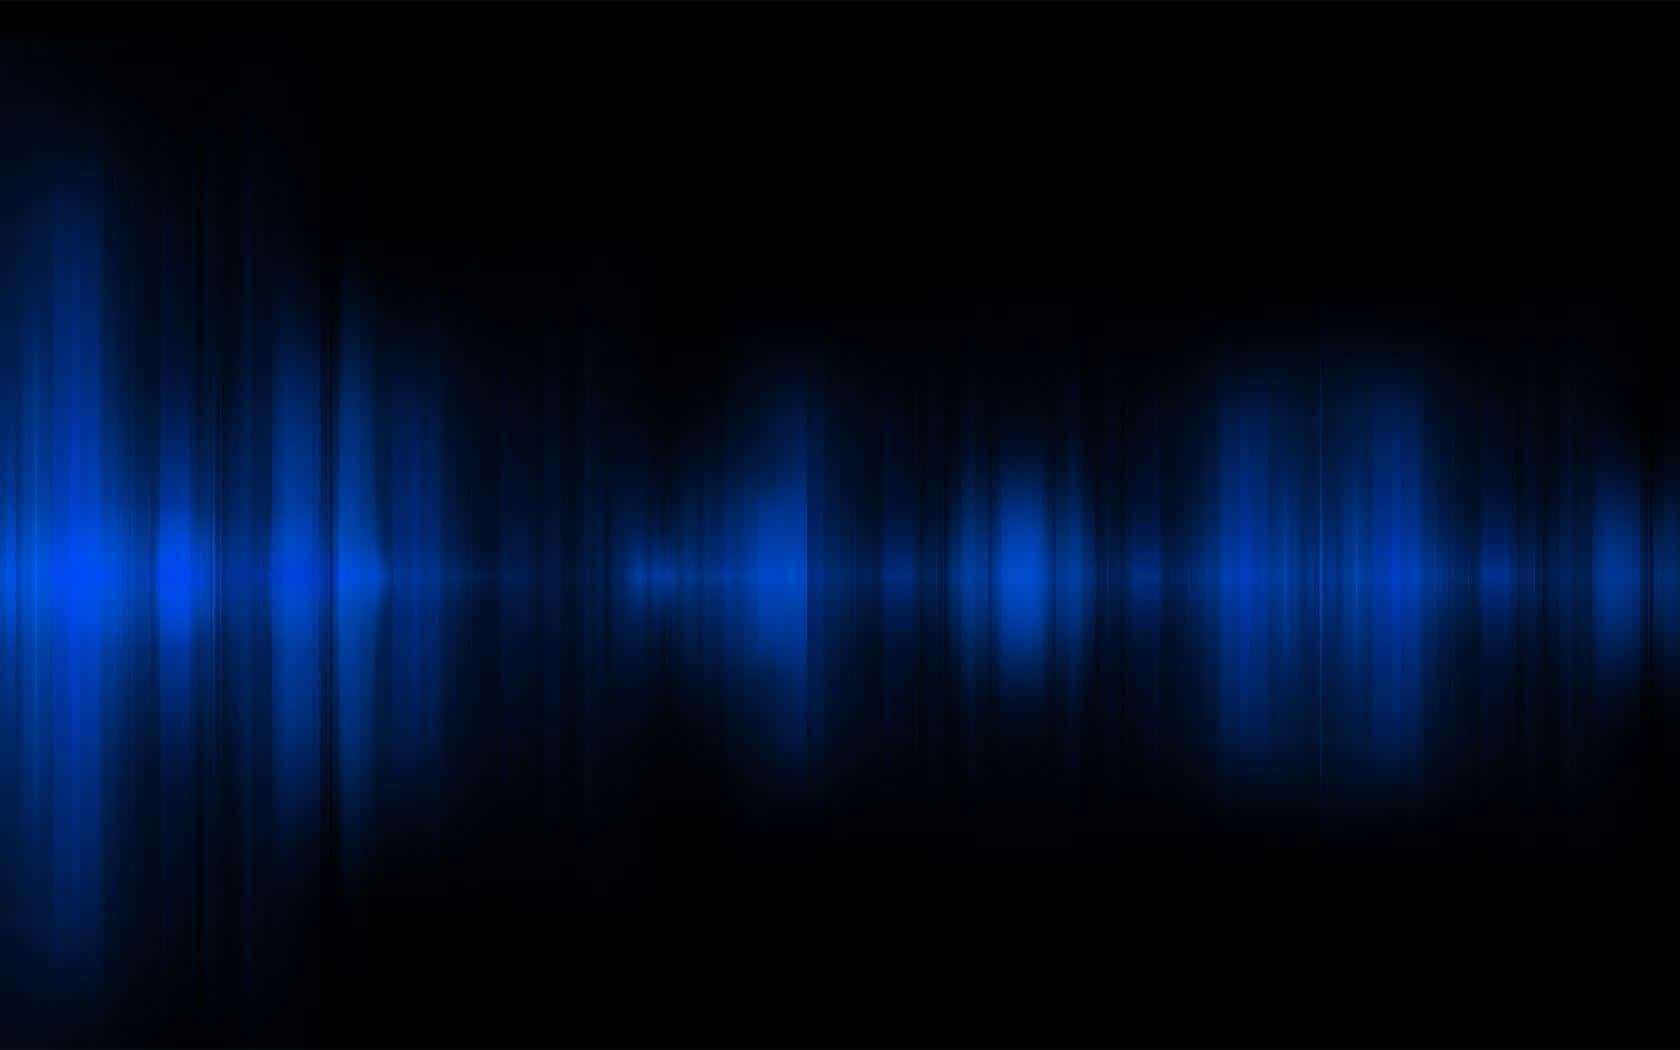 Soft Sound Waves Blue And Black Background